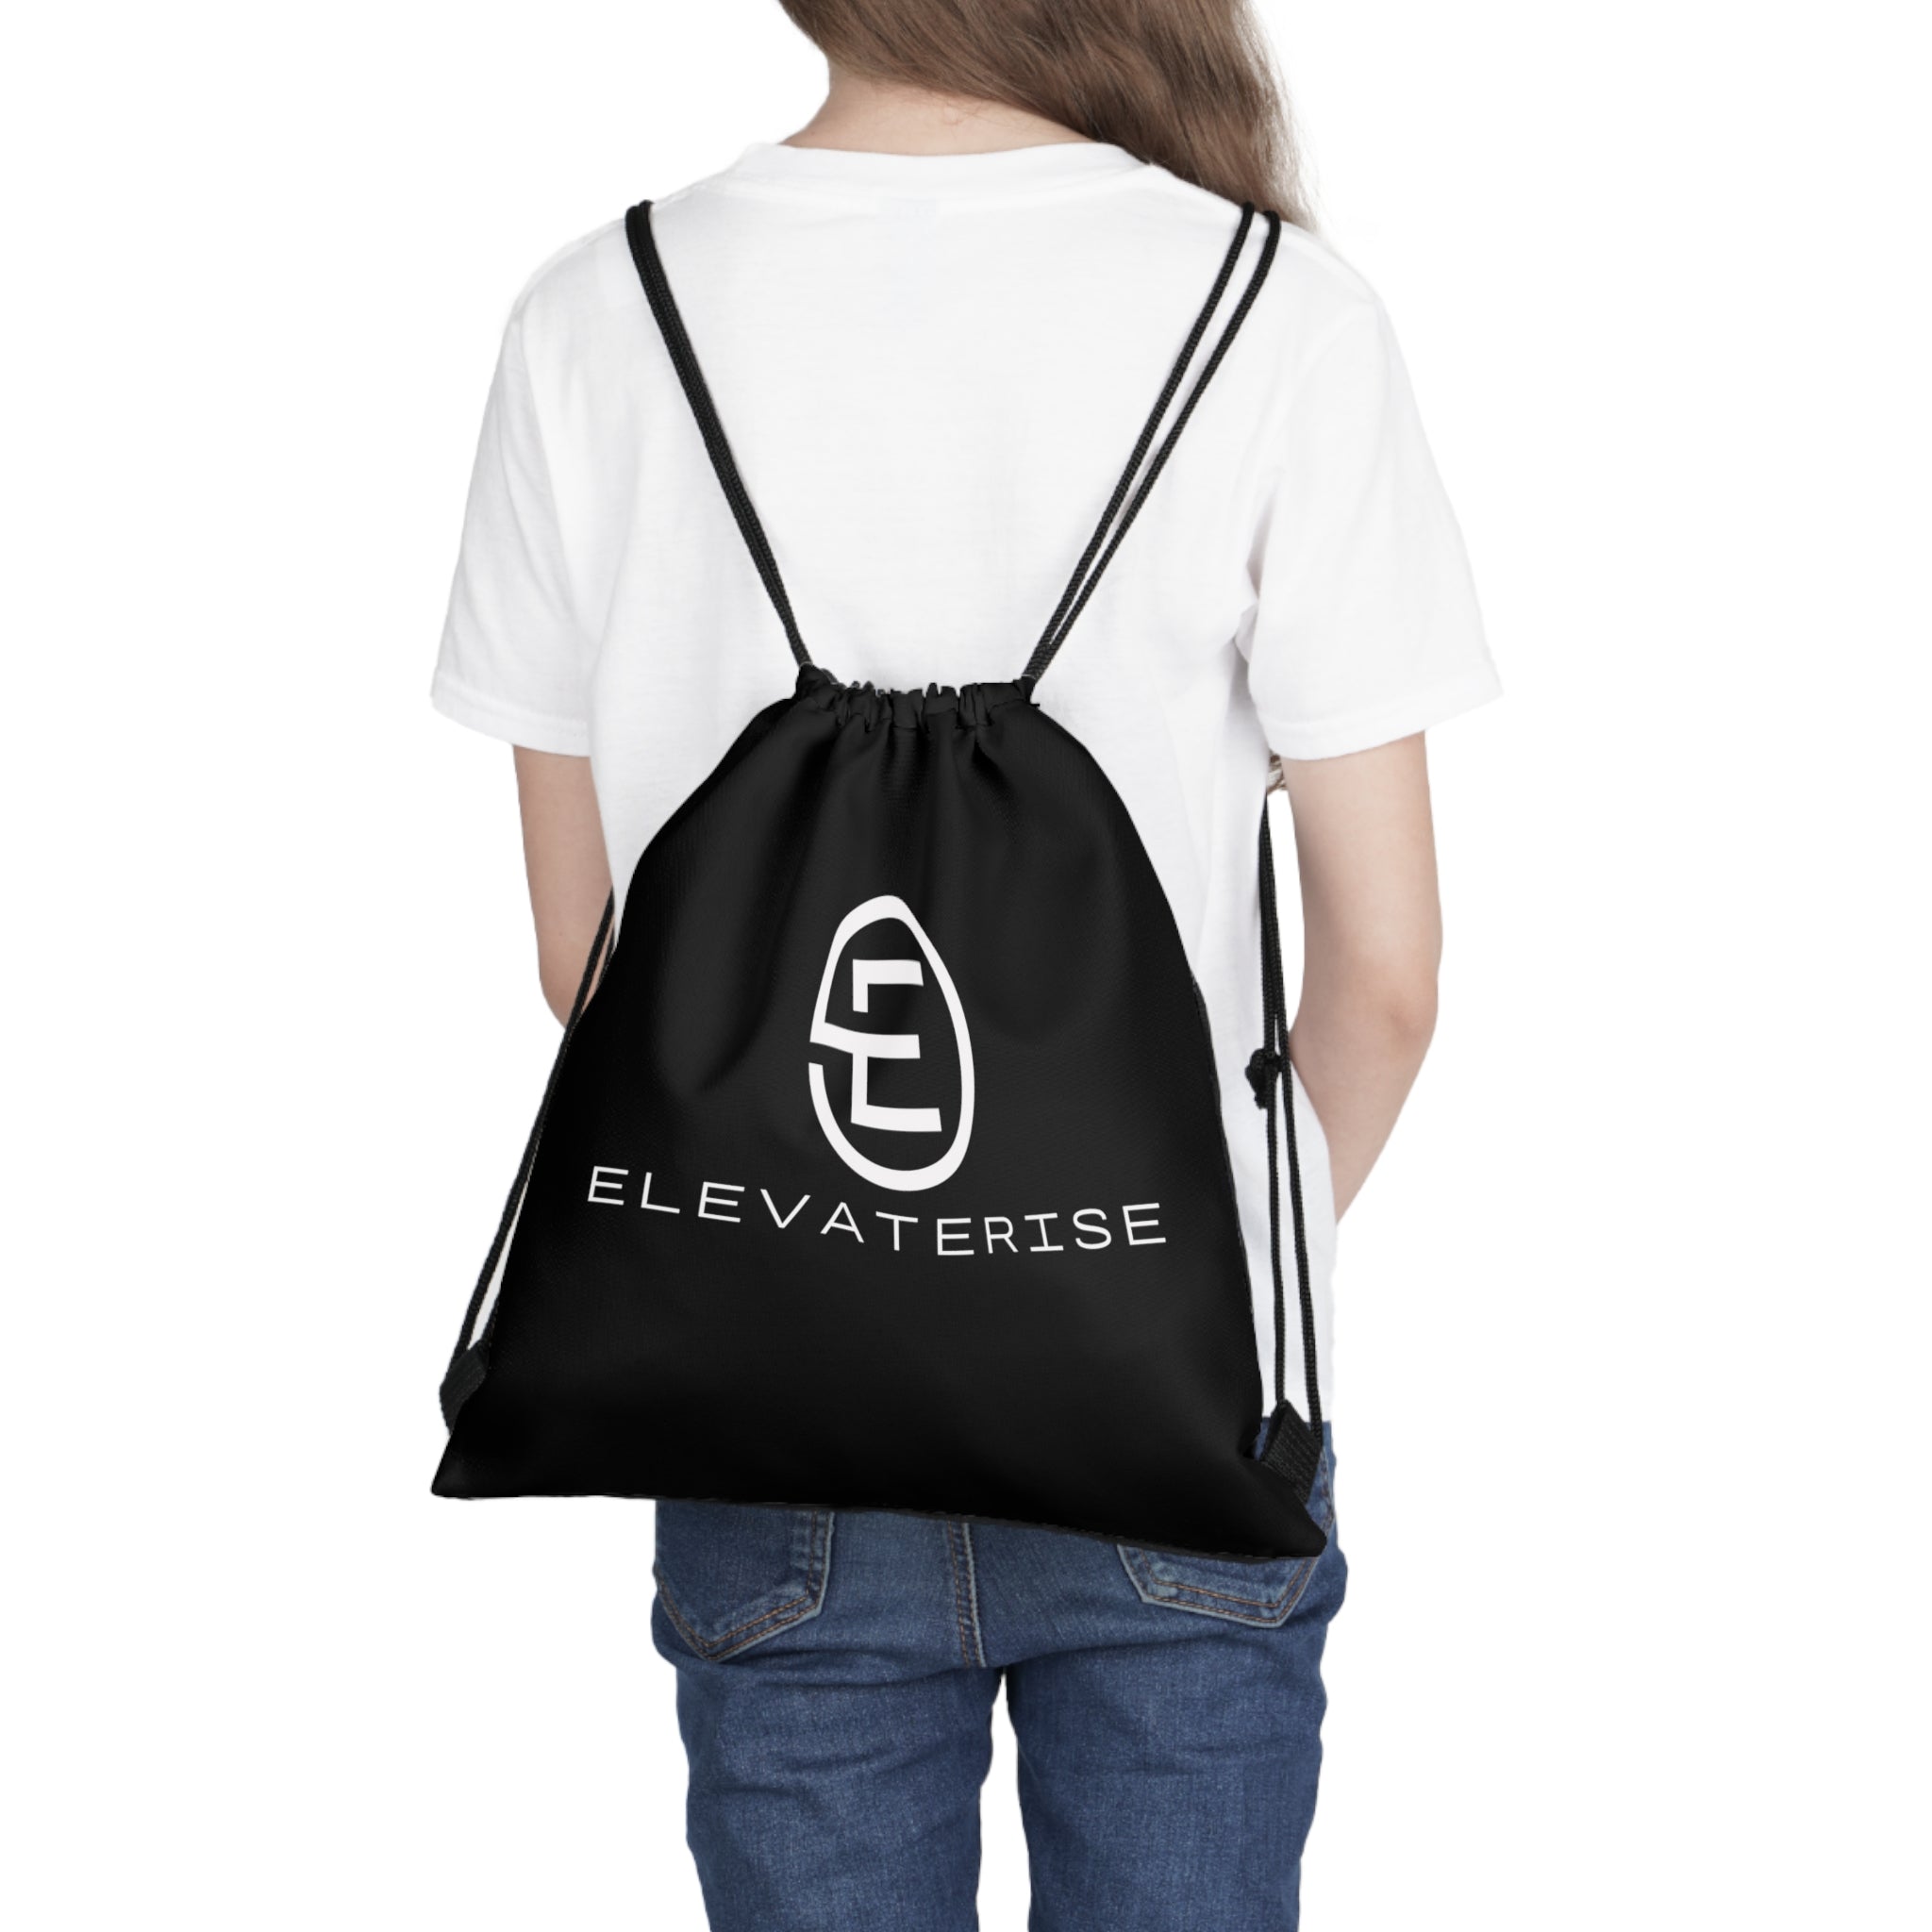 ElevateRise Drawstring Bag